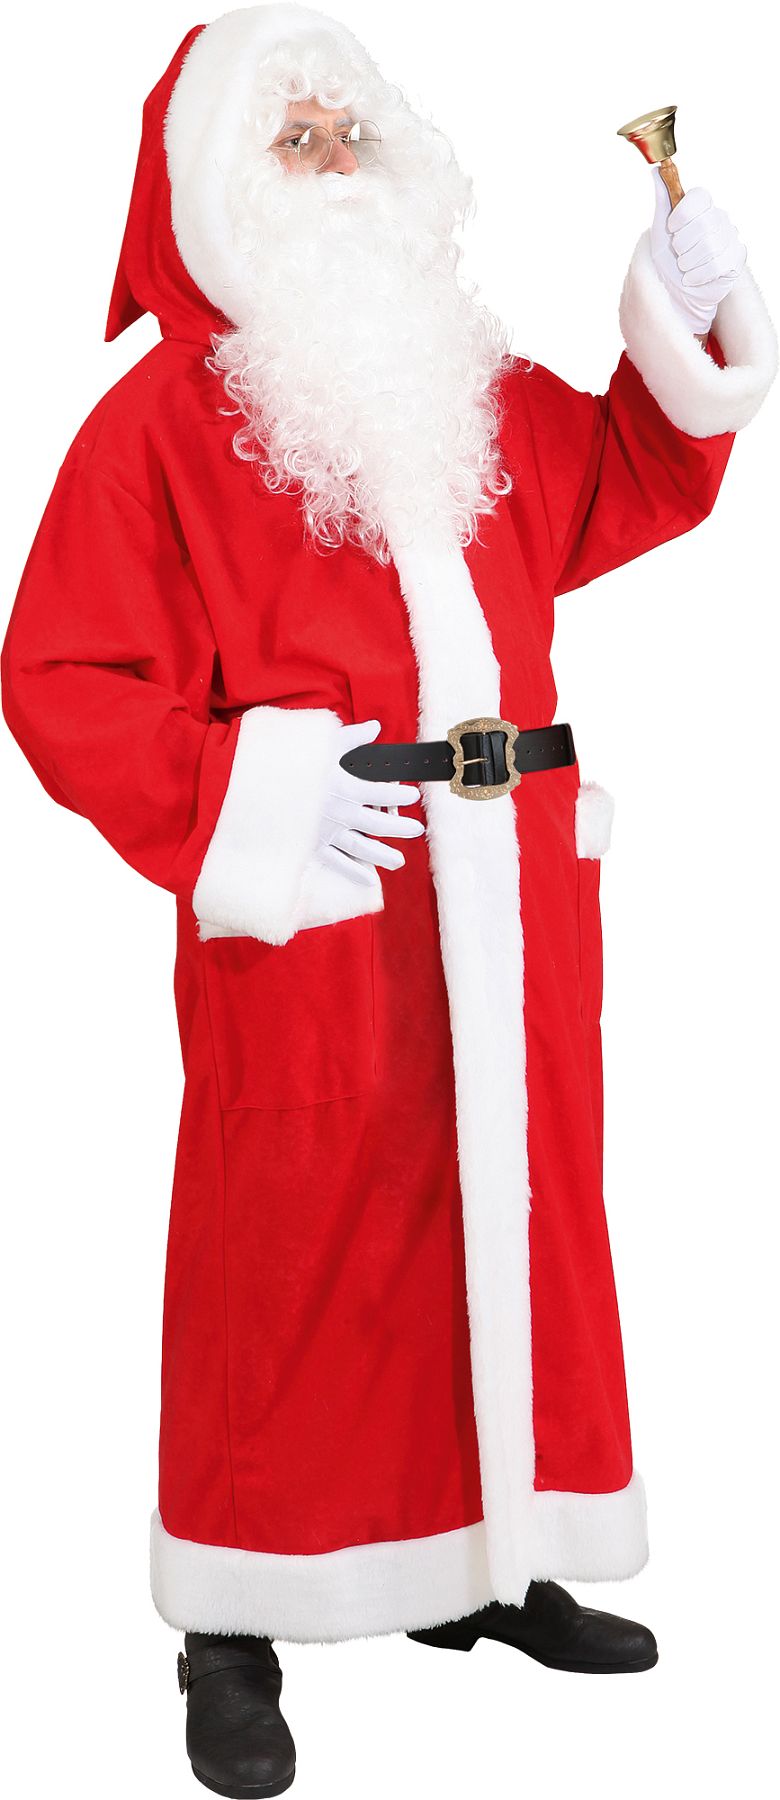 Santa Claus coat, red